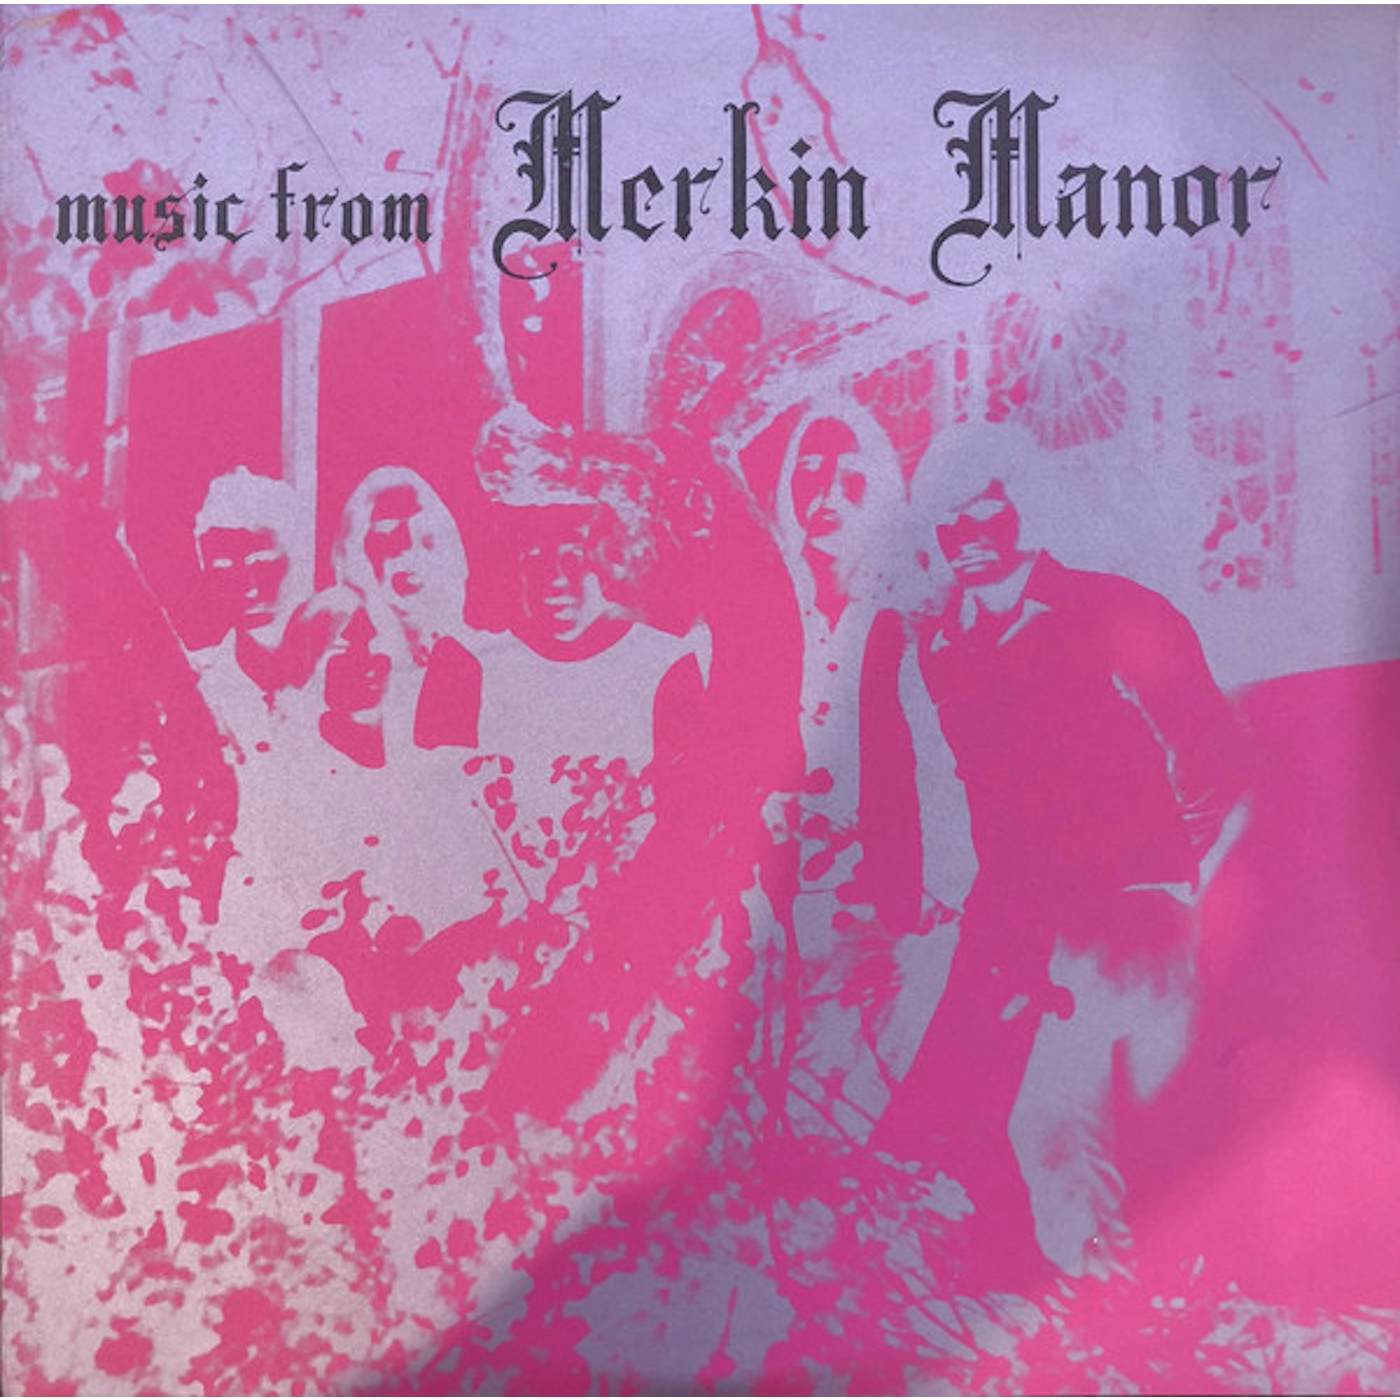 Music From Merkin Manor Vinyl Record